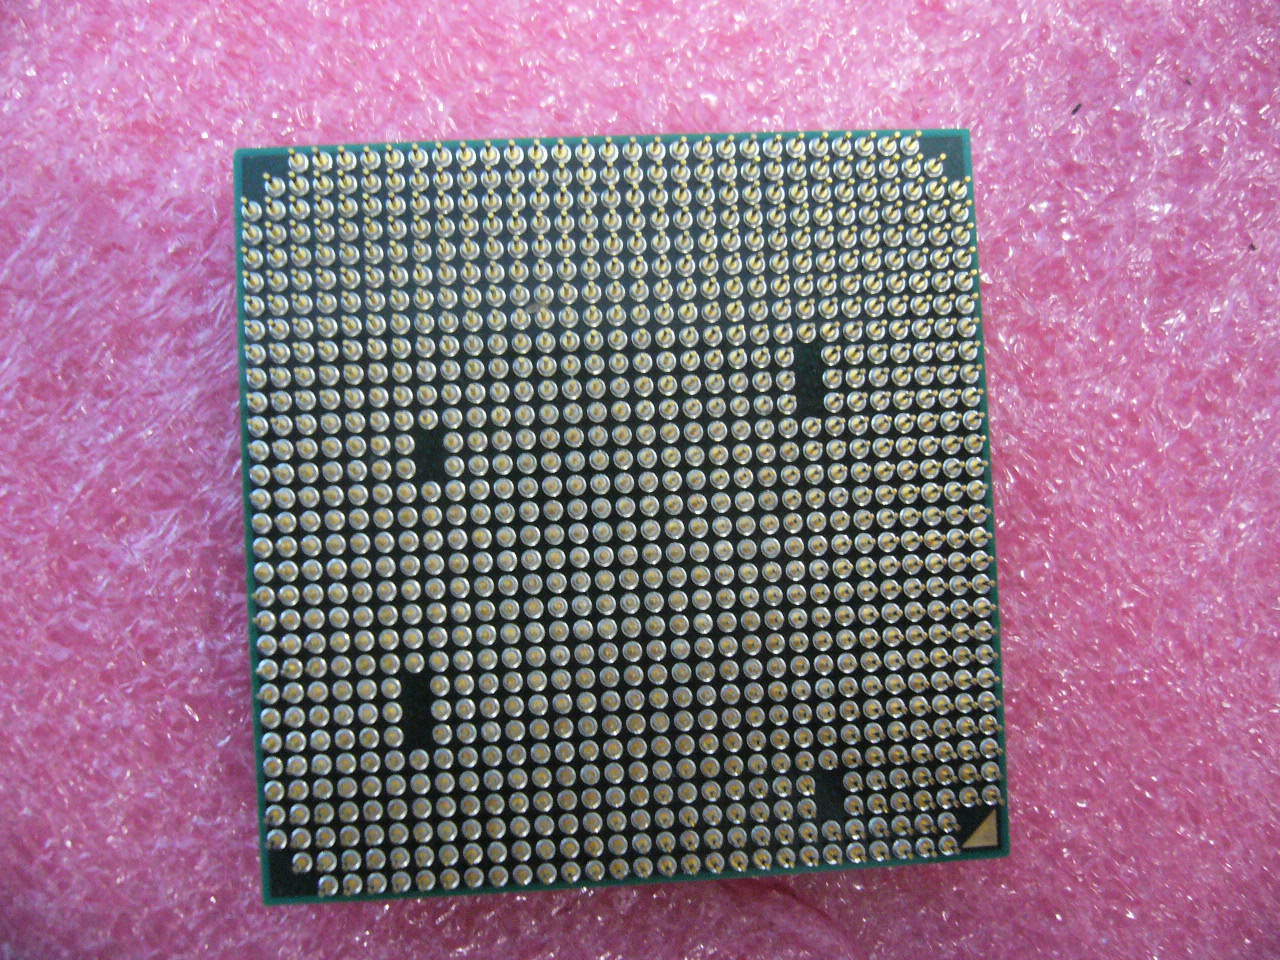 QTY 1x AMD Athlon II X2 245 2.9 GHz Dual-Core (ADX245OCK23GQ) CPU Socket AM3 - Click Image to Close